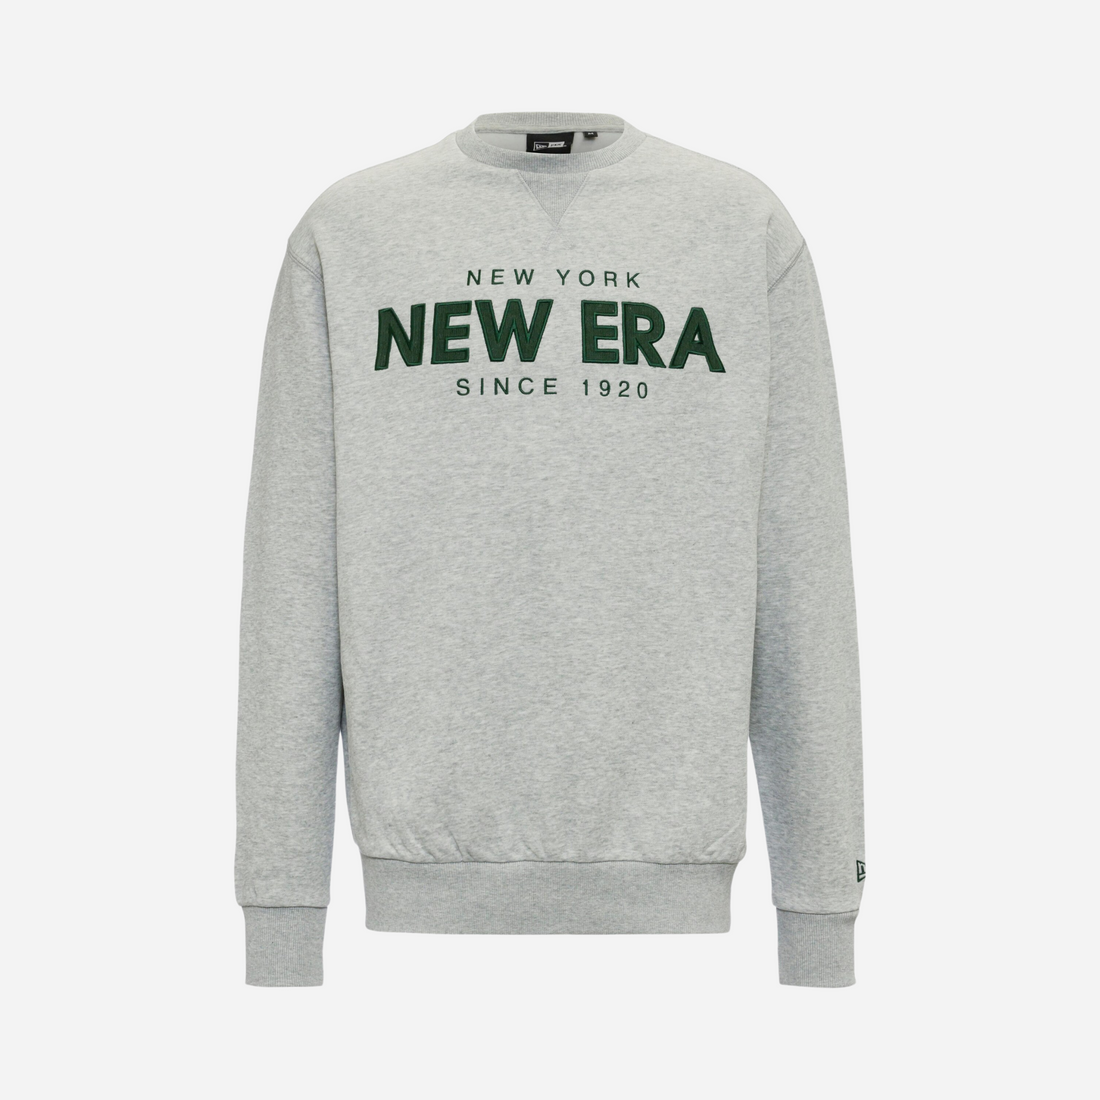 New Era New Era Heritage Sweatshirt Grey - Hympala Store 